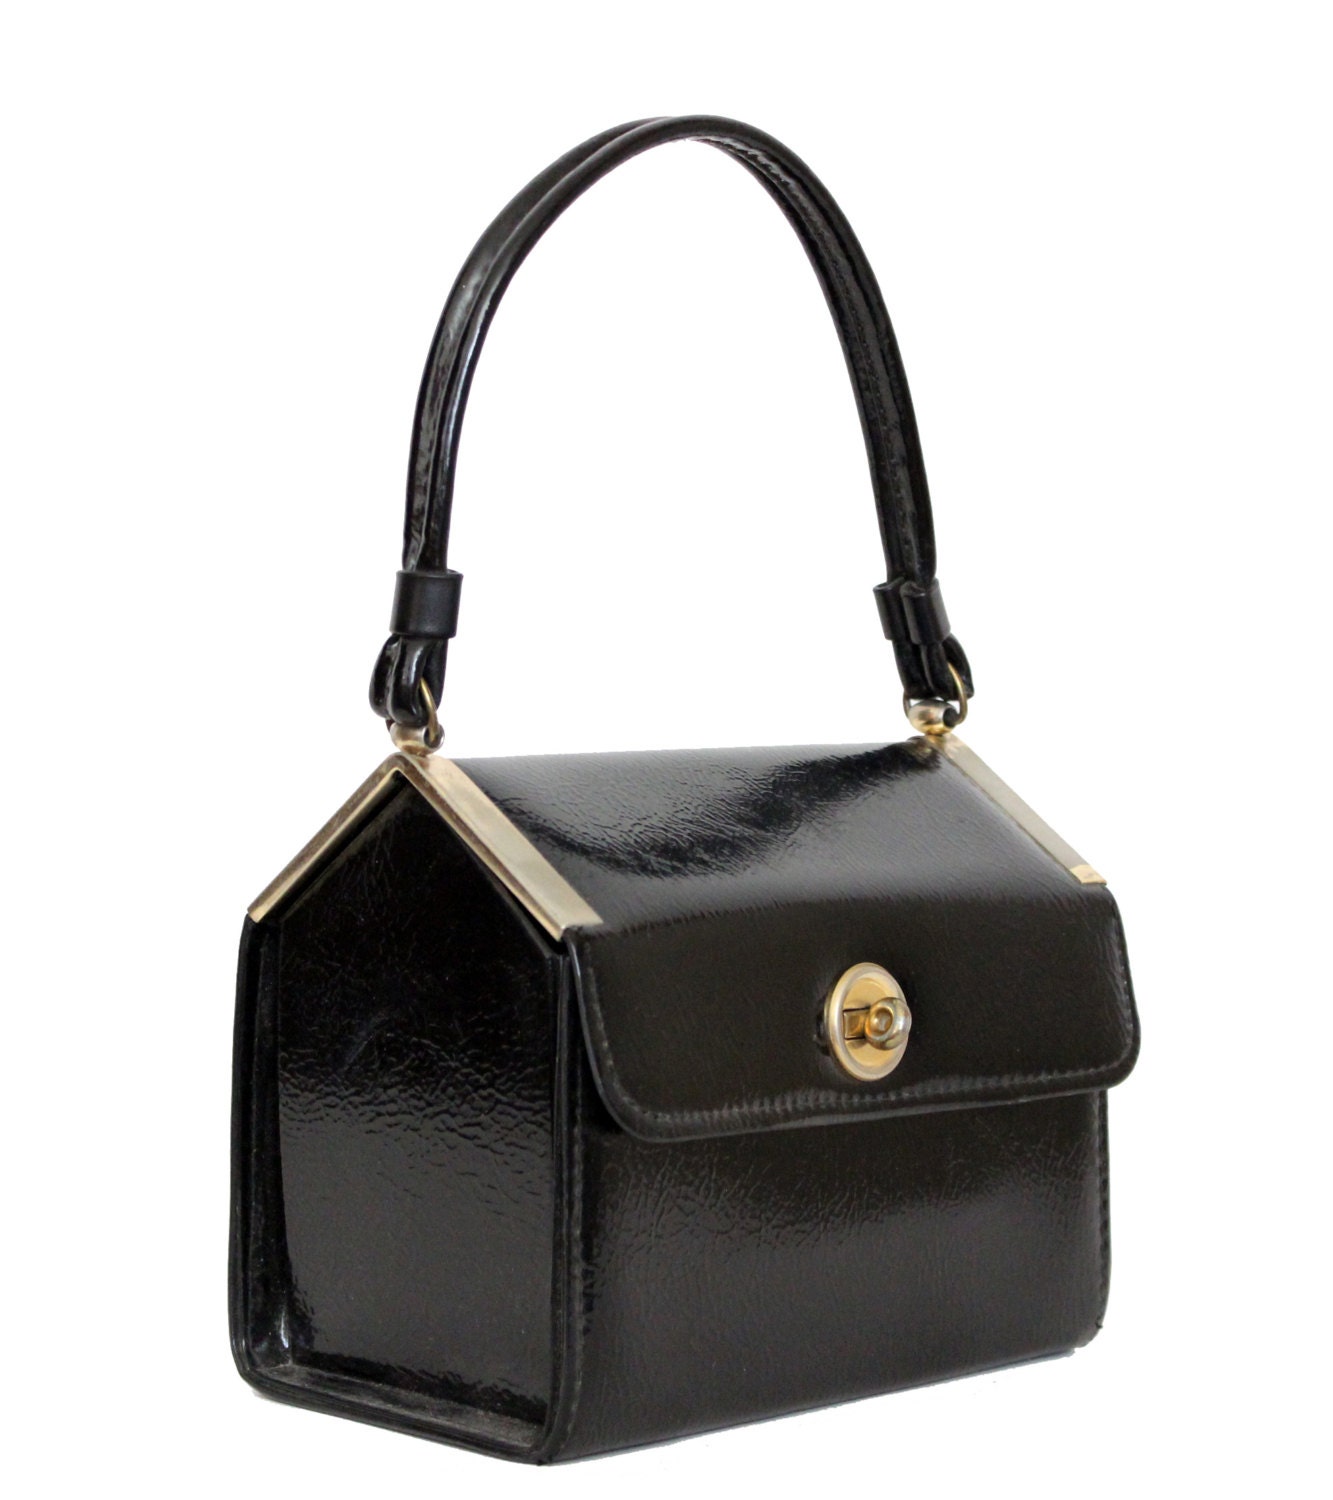 Vintage Purse / Black / Patent Leather / Hand Bag / 1950s 50s